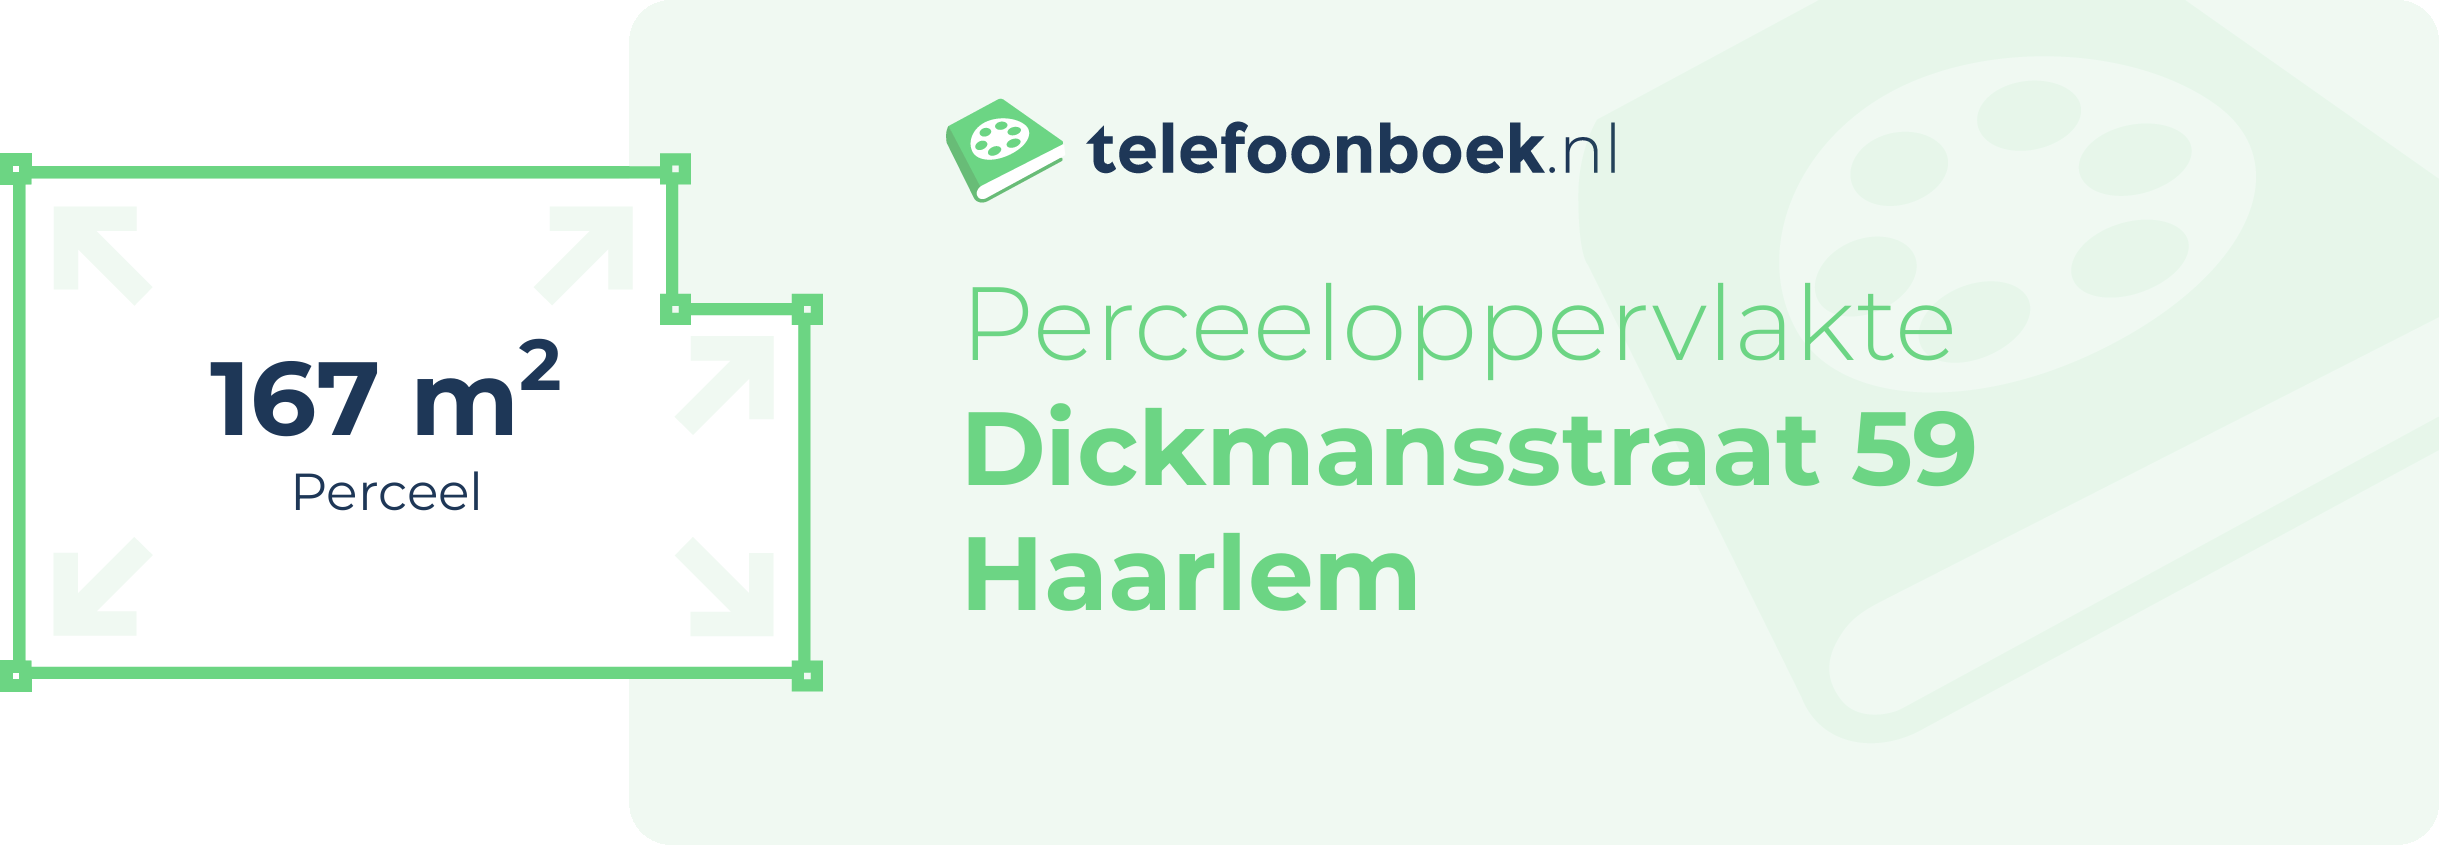 Perceeloppervlakte Dickmansstraat 59 Haarlem